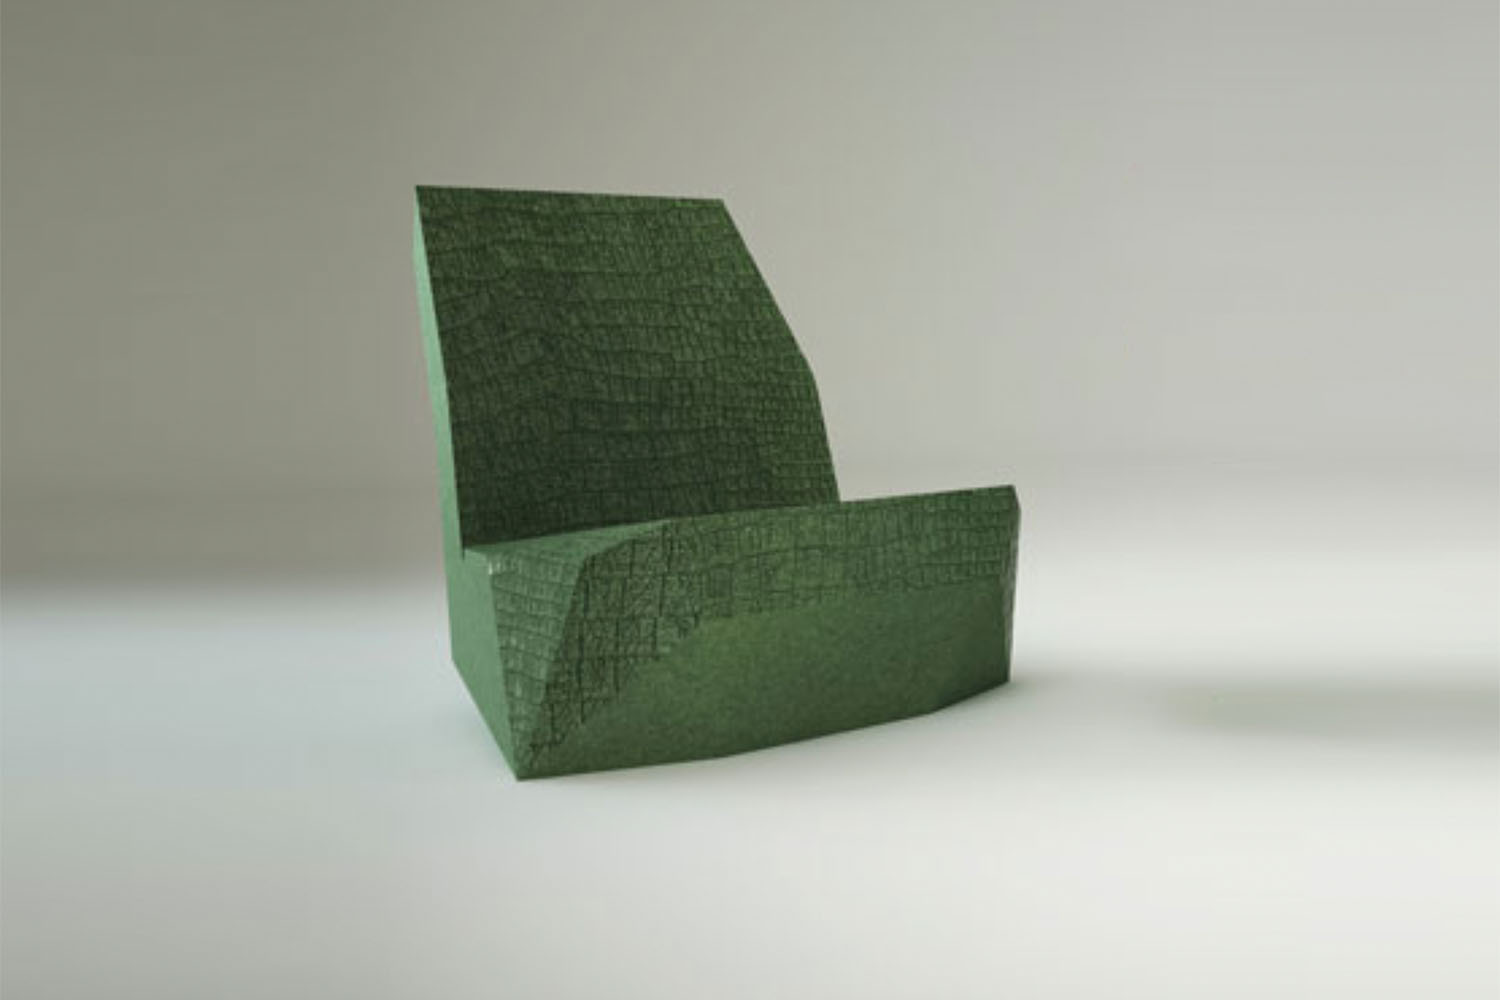 Taporo fabrication fauteuils urbains Pablo Reinoso en BEFUP imitation croco